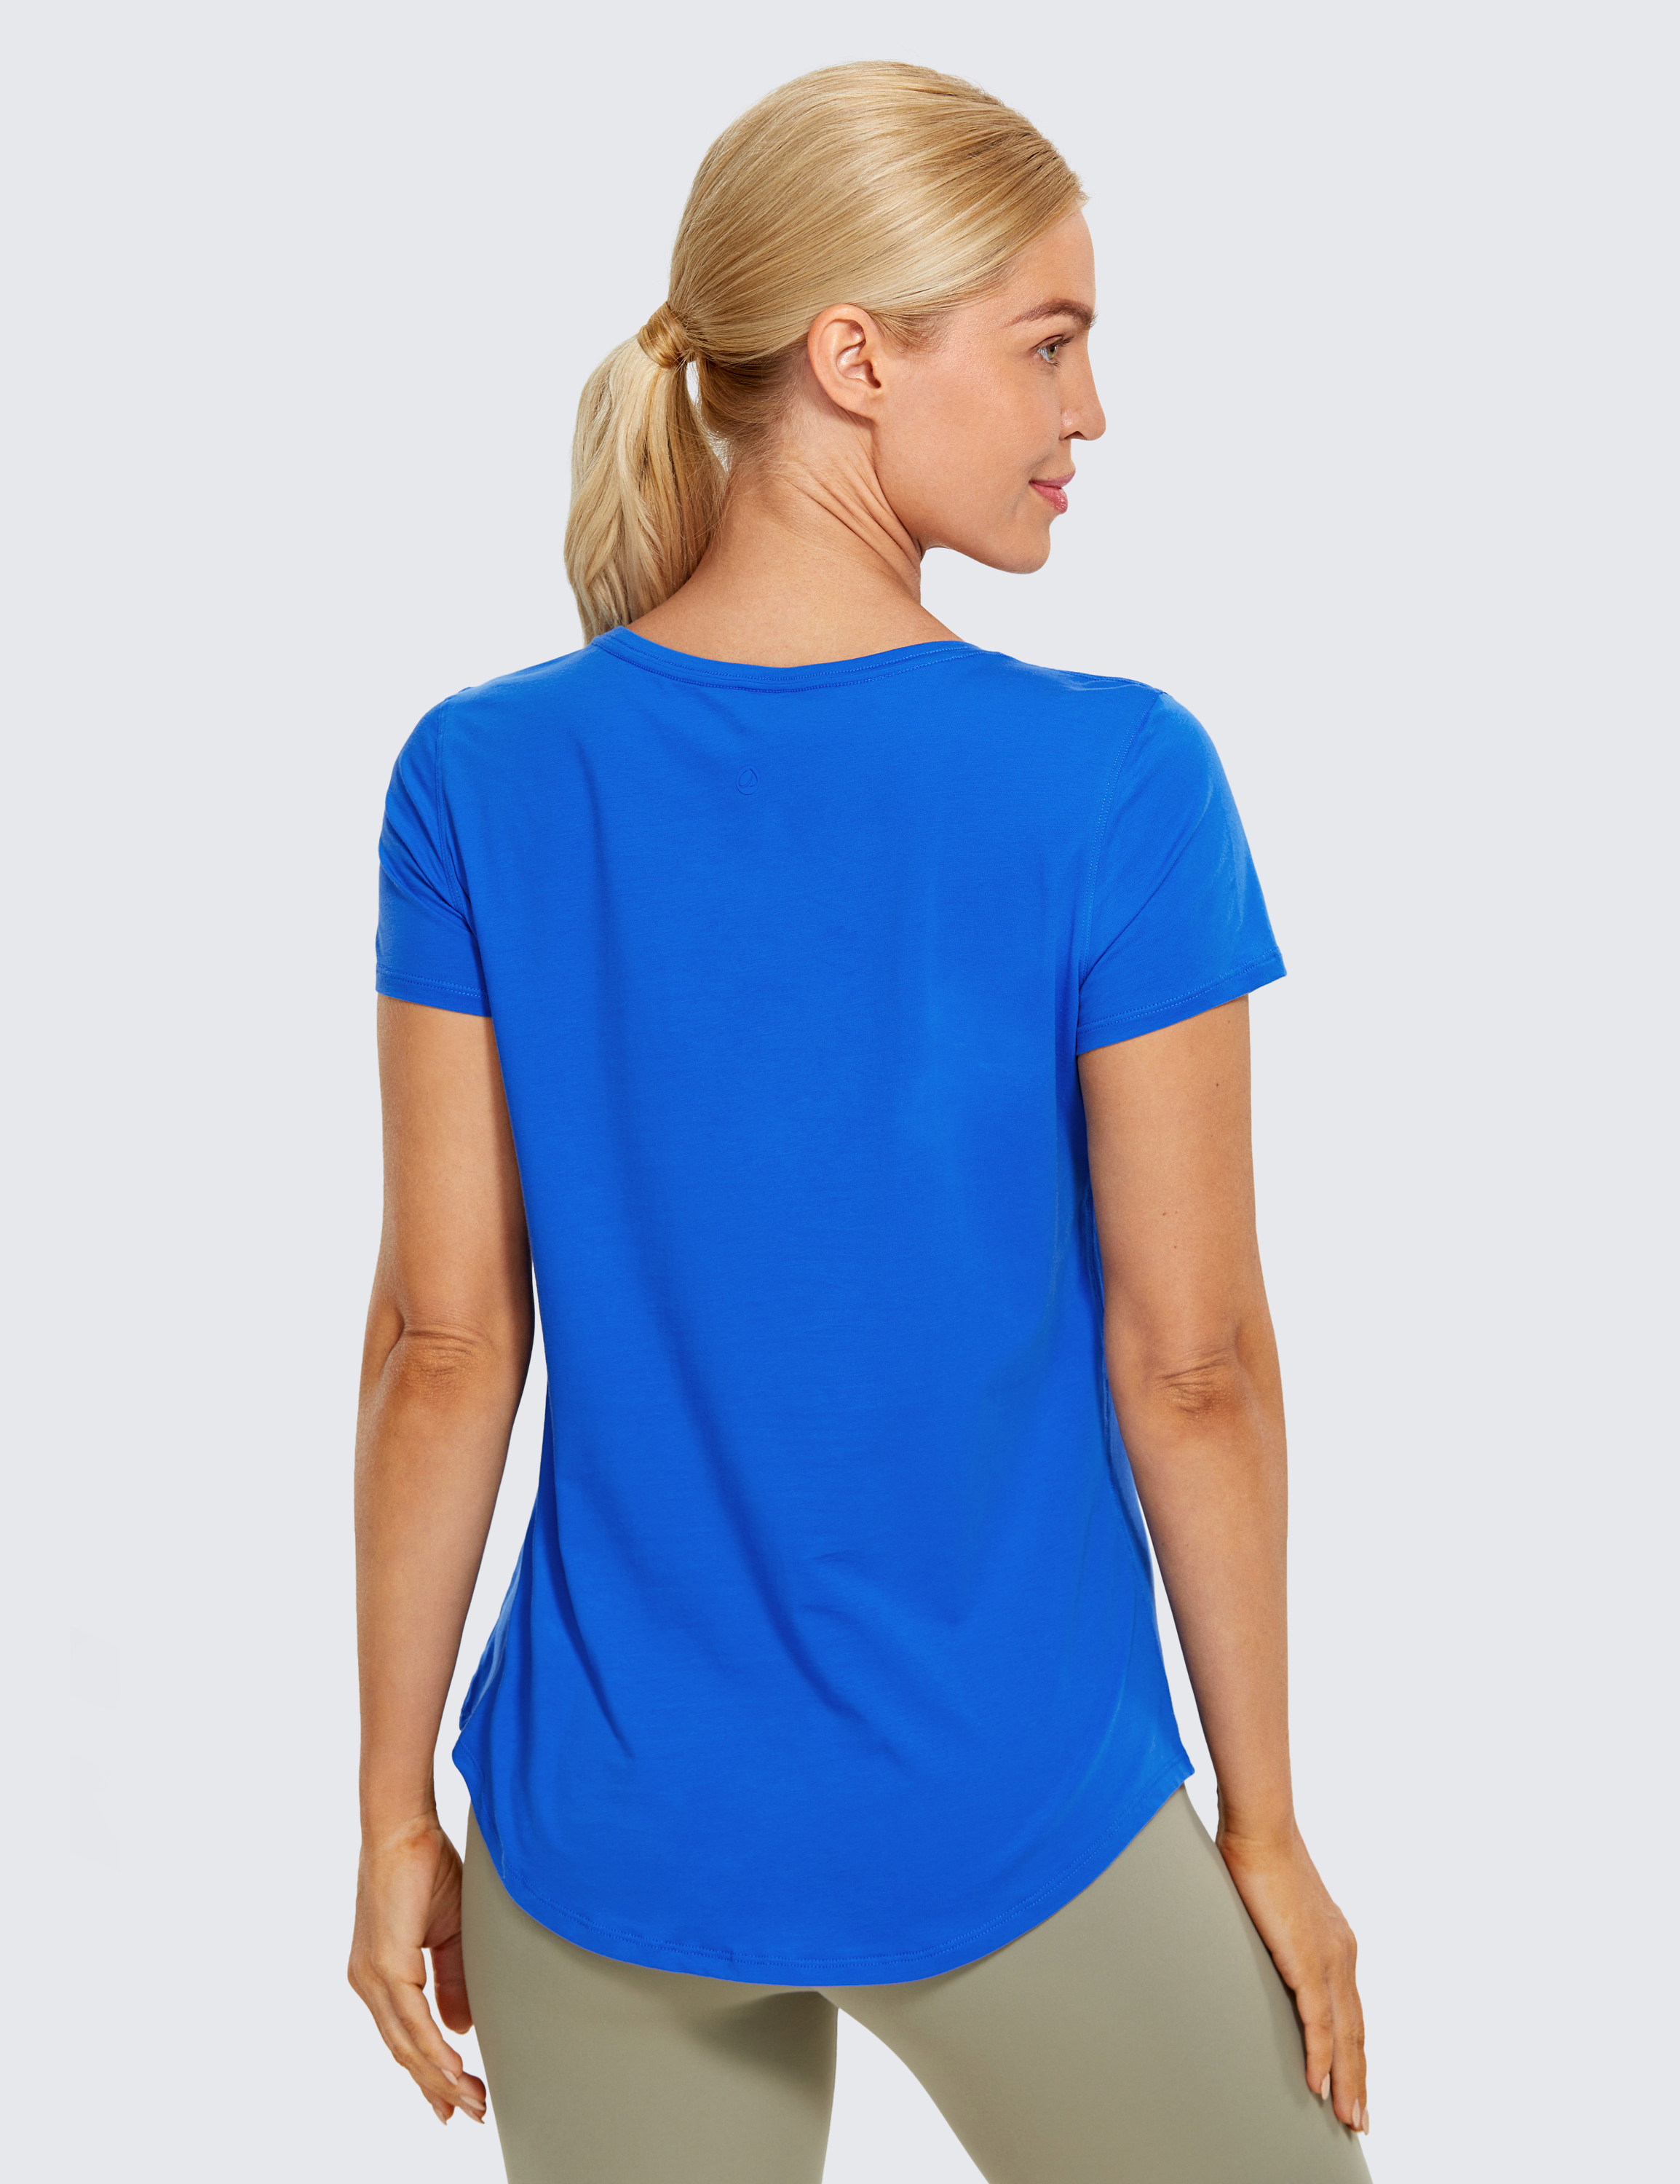 CRZ YOGA Pima Cotton Women Short Sleeve T-shirt Workout Shirt Yoga